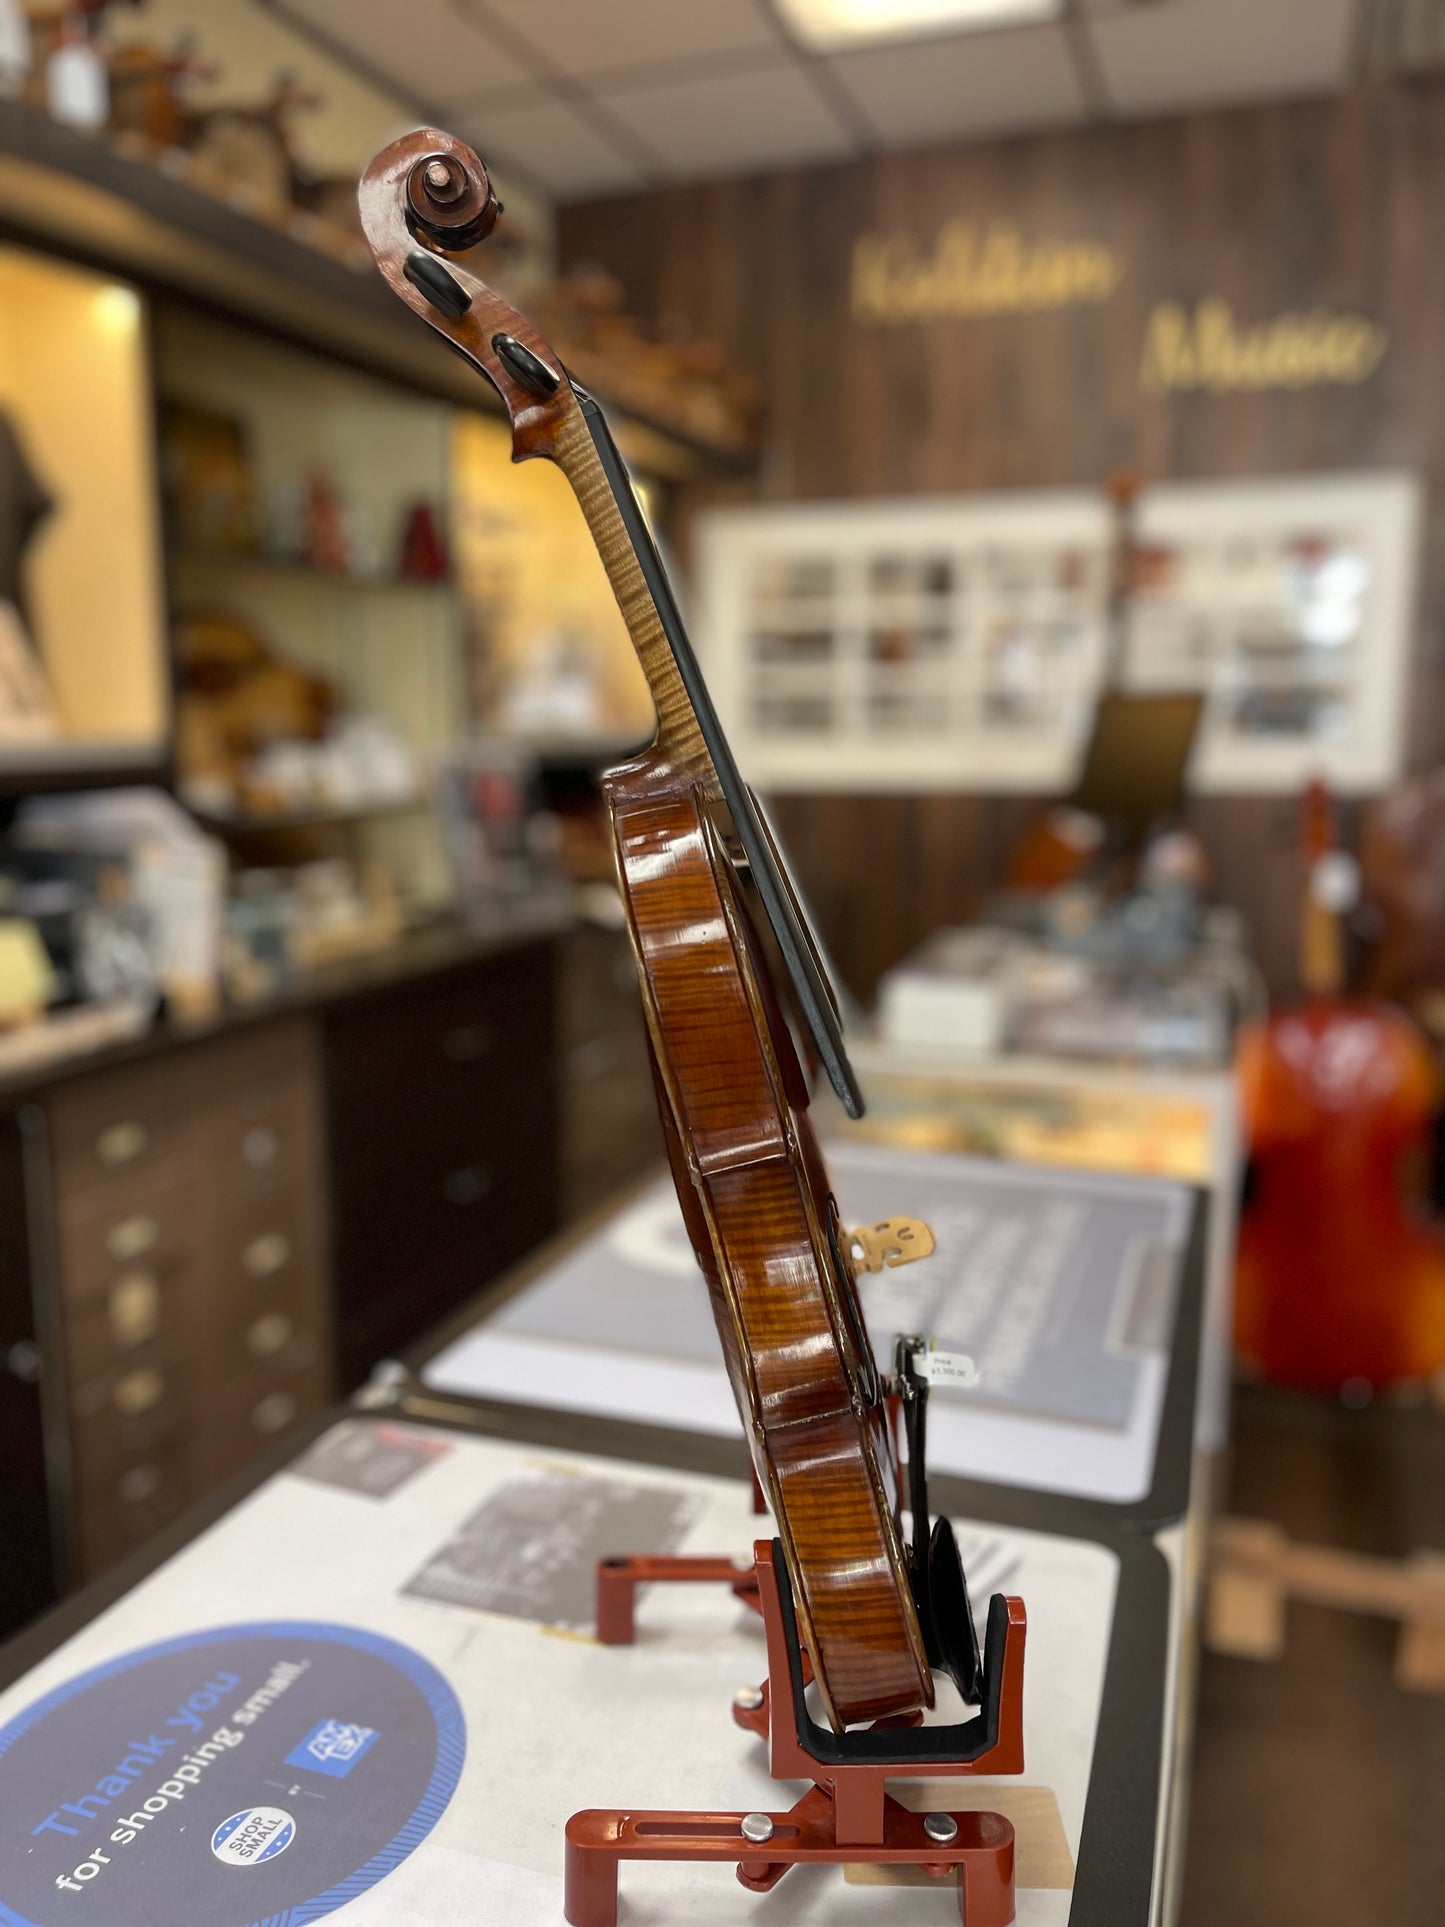 Stradivarius Copy Violin